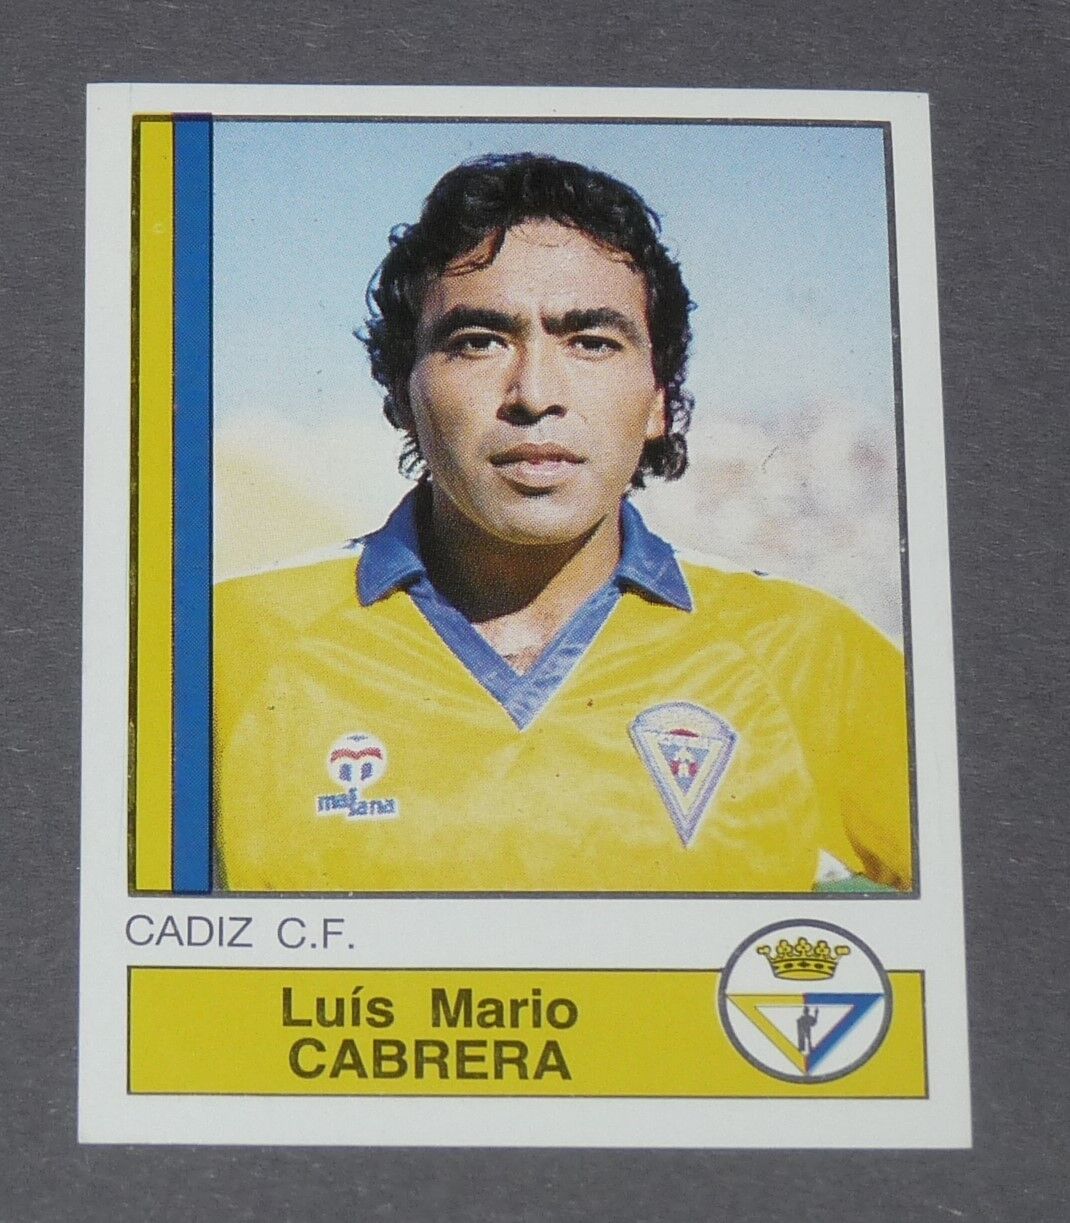 89 LUIS MARIO CABRERA CADIZ CF PANINI FOOTBALL LEAGUE 87 SPAIN 1986-1987 FOOTBALL